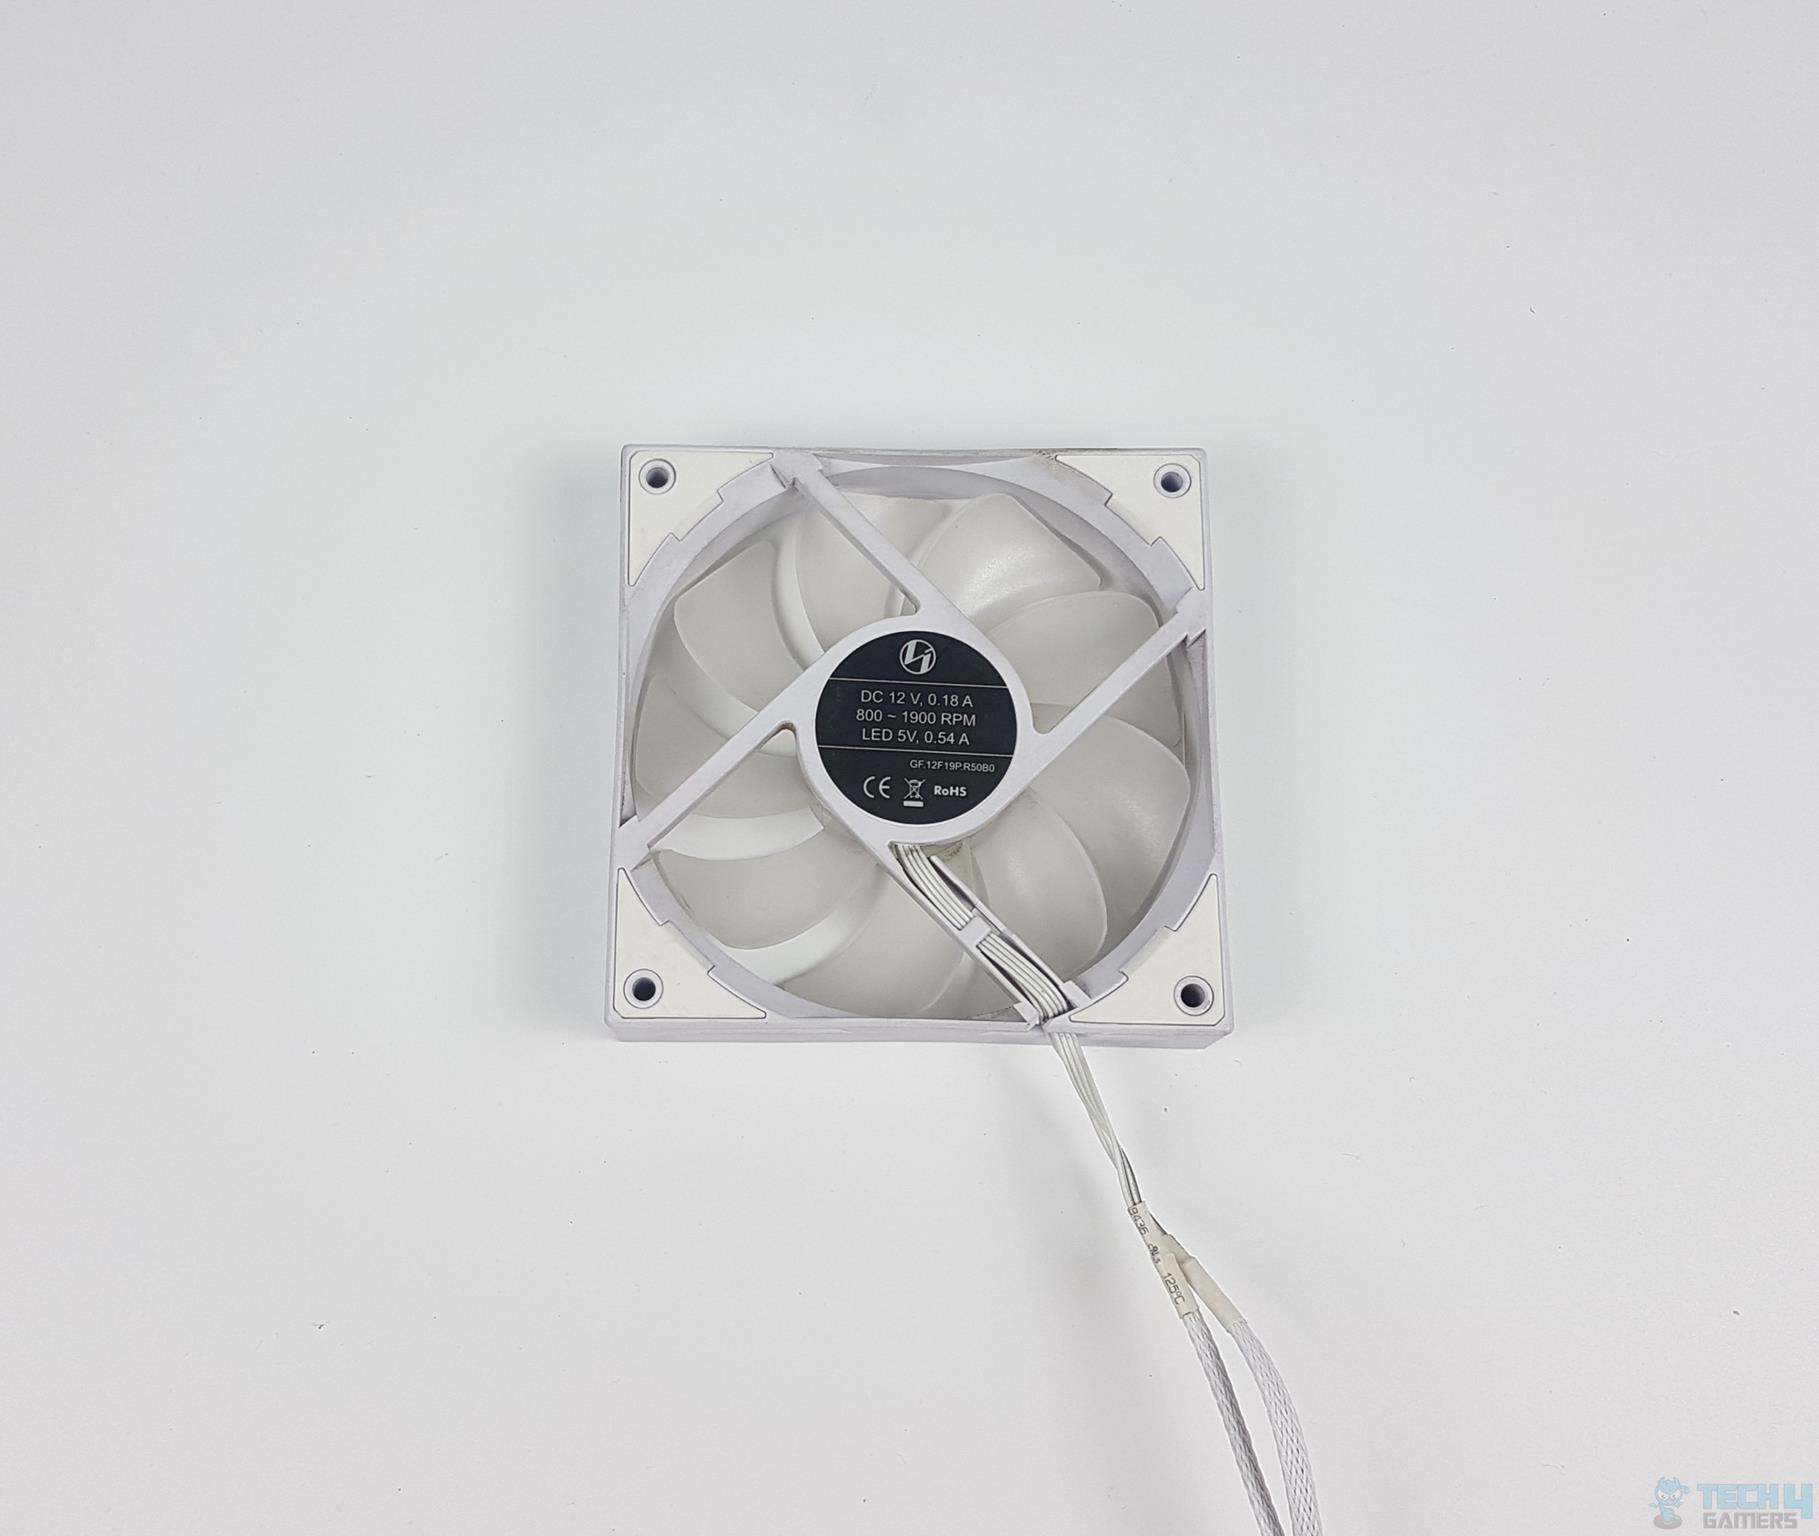 Lian Li GALAHAD 360 White Cooler — The backside of the fan